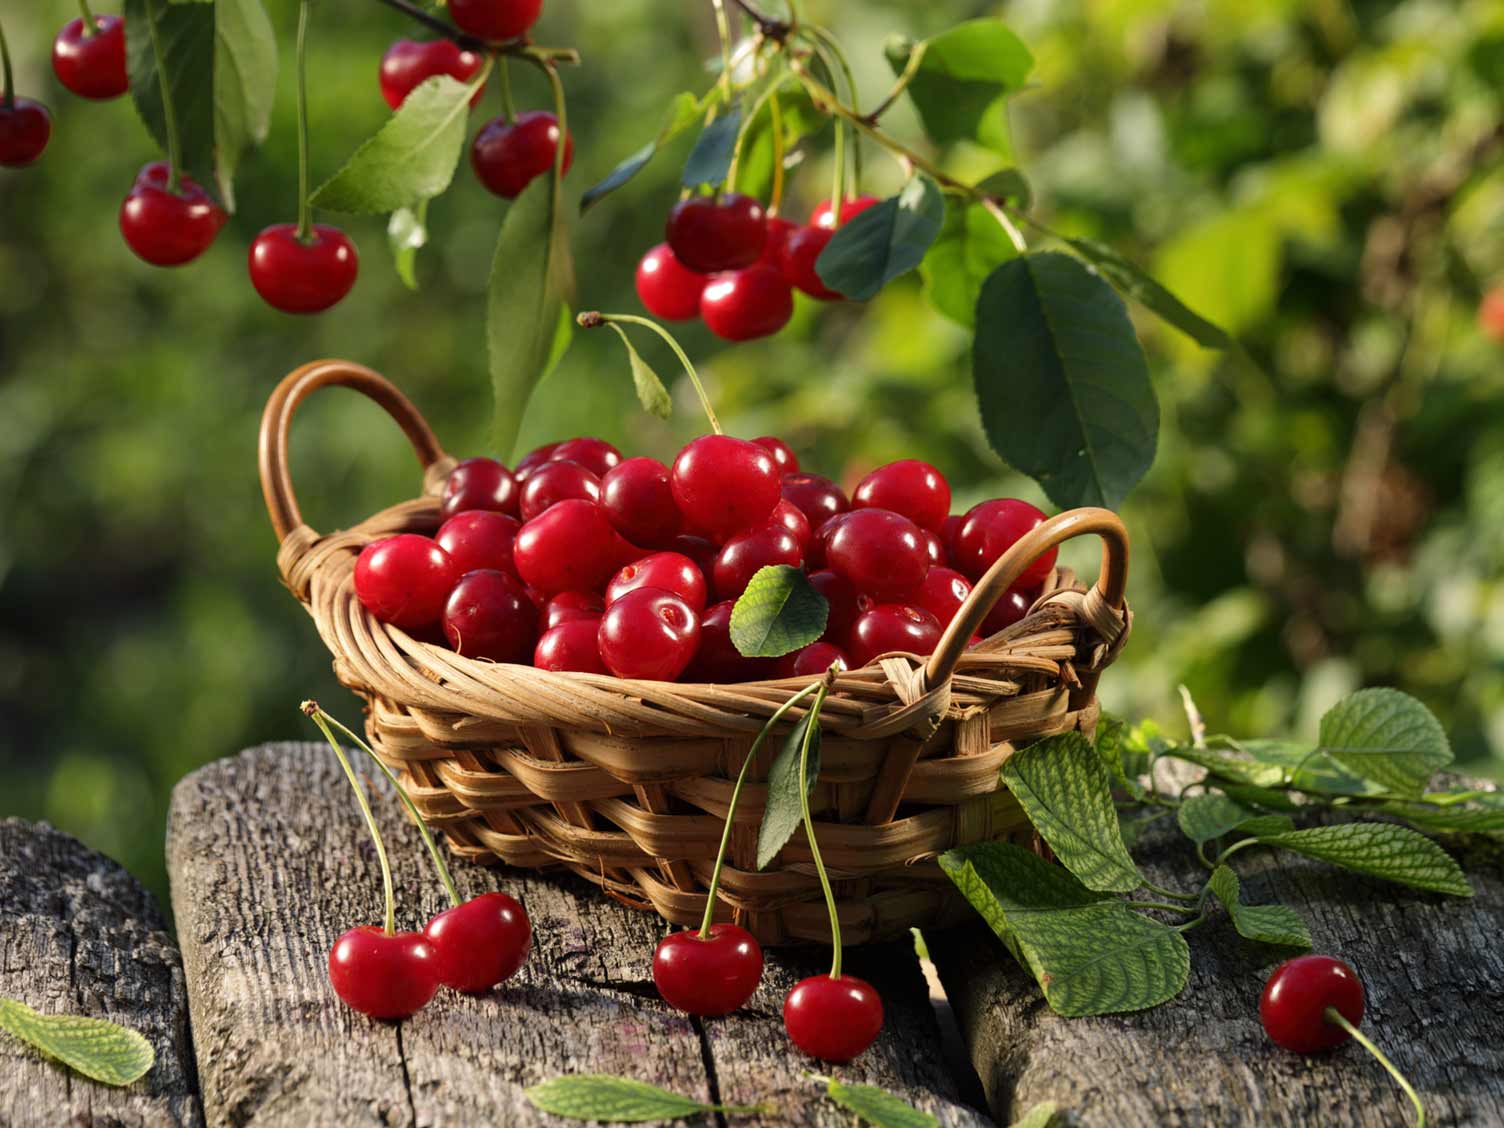 Harvest of homegrown cherries